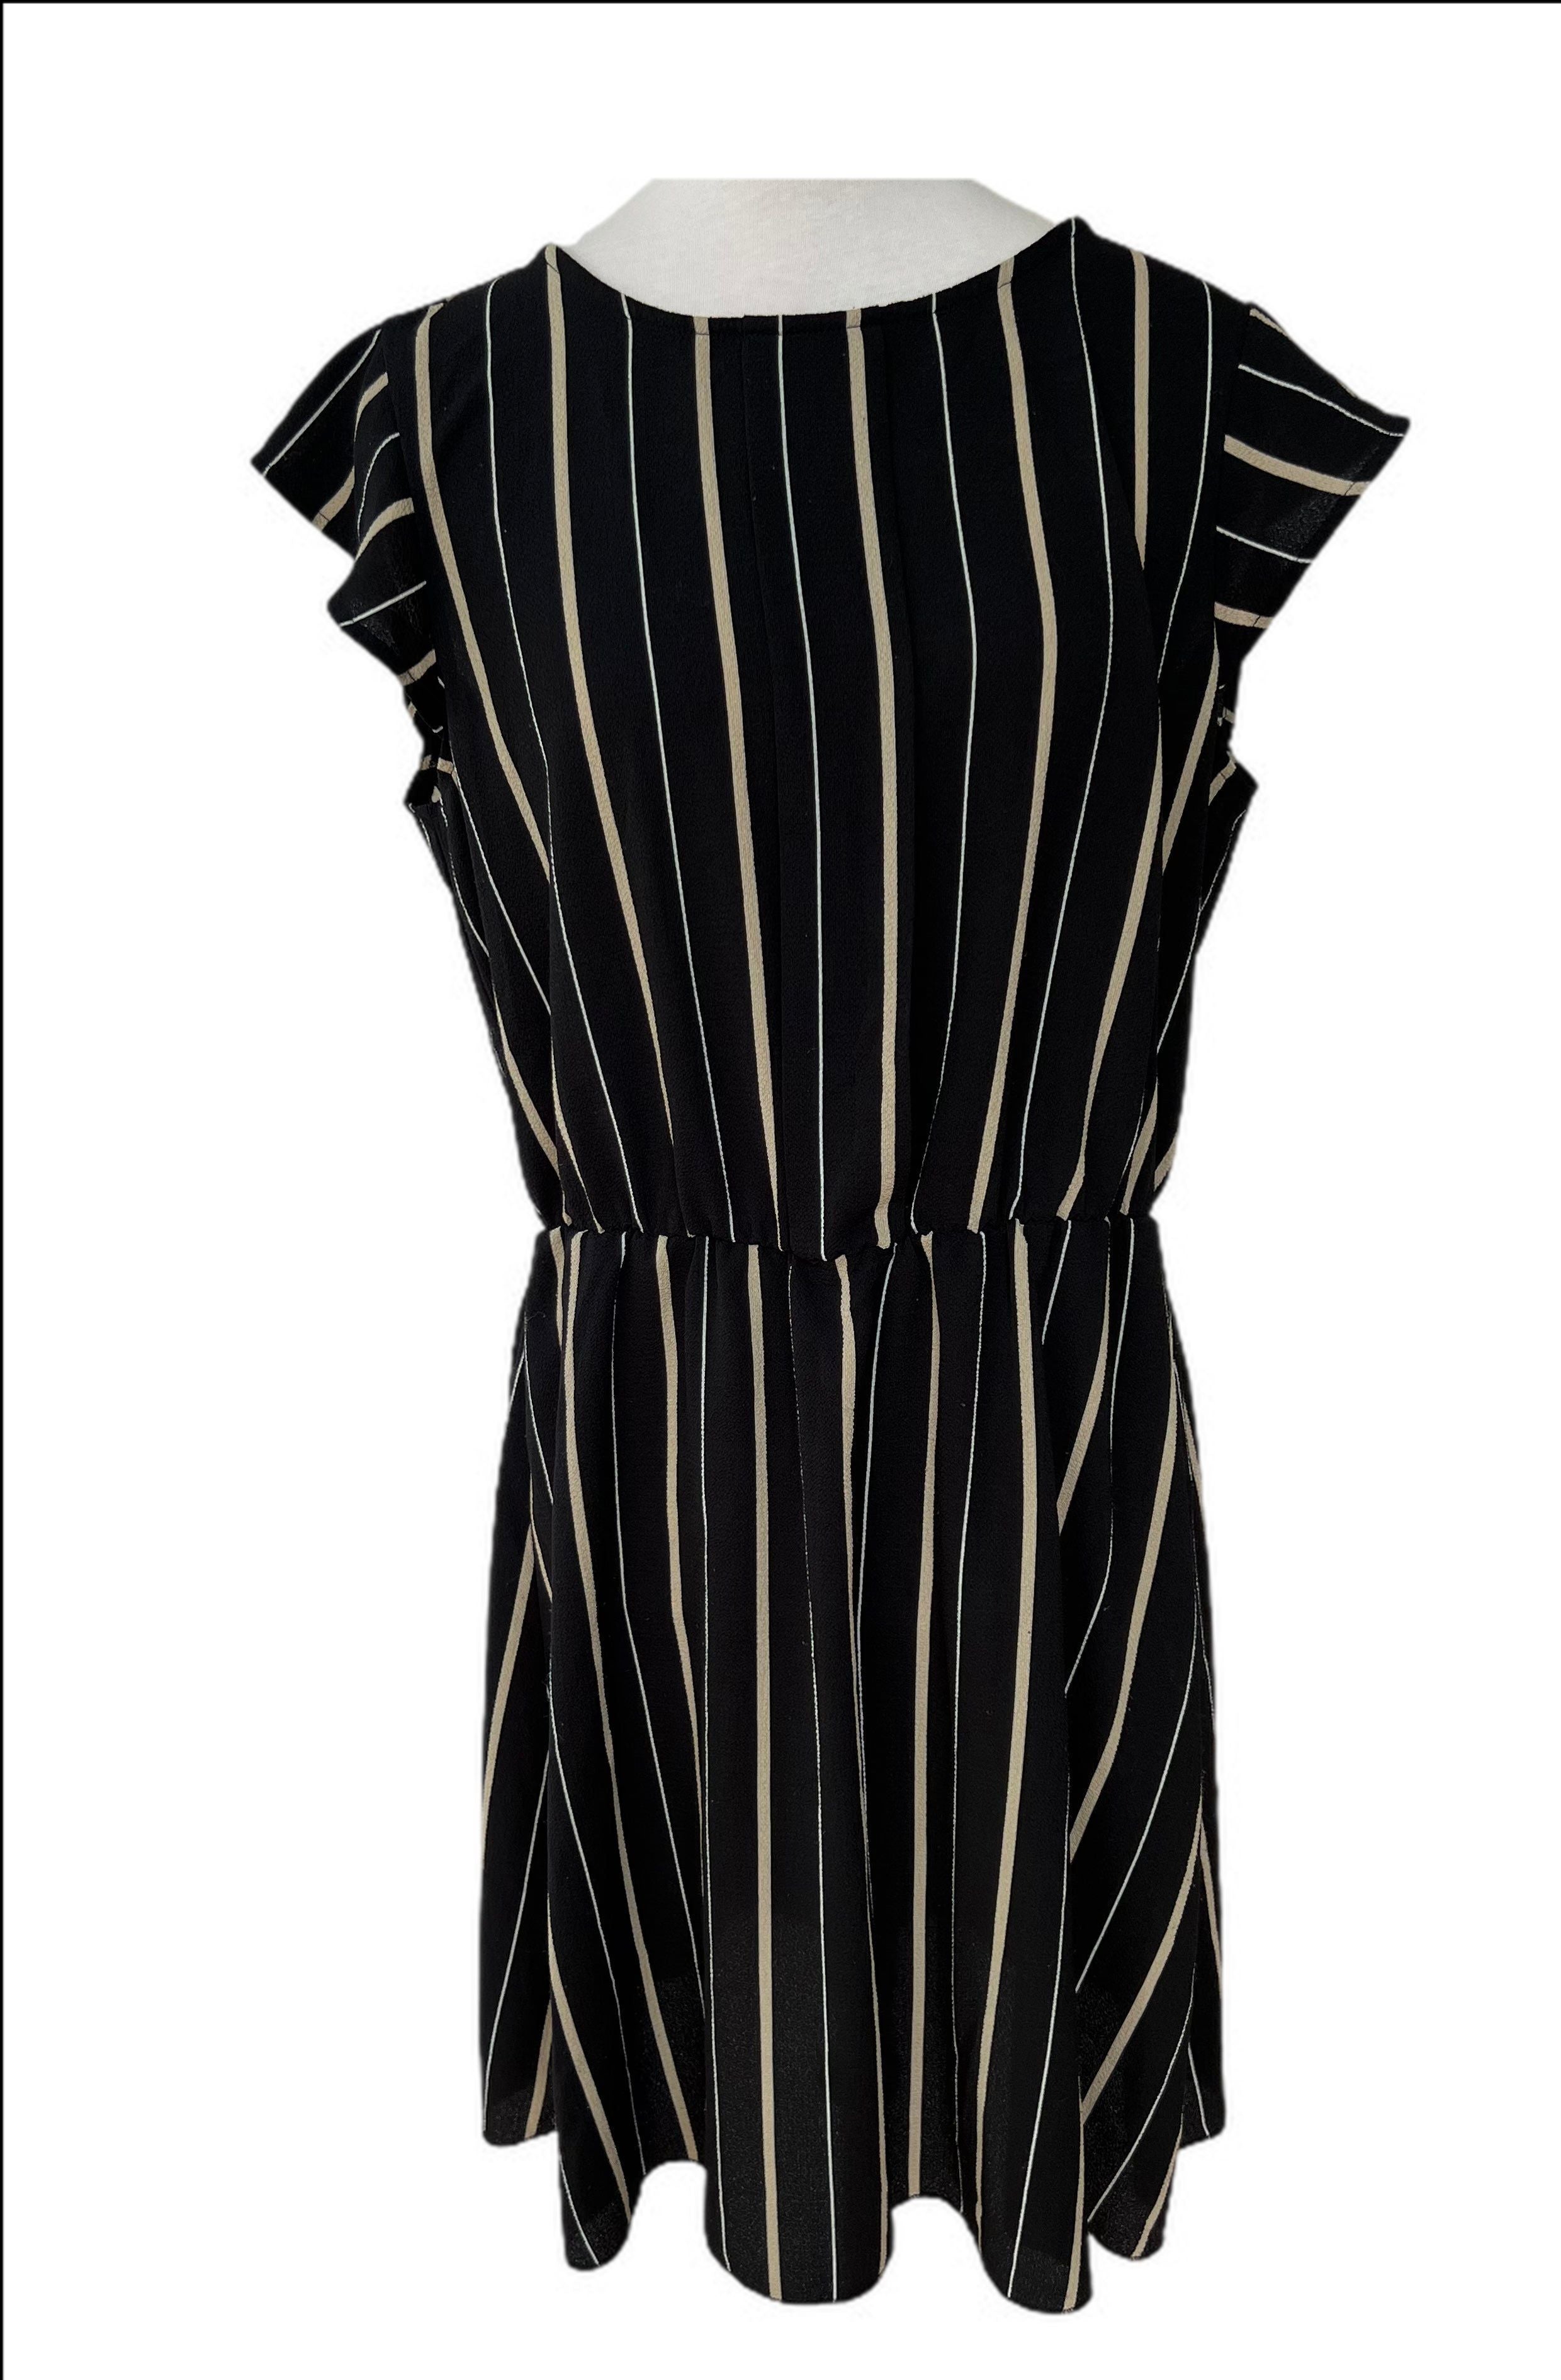 Striped sleeveless elastic waist dress